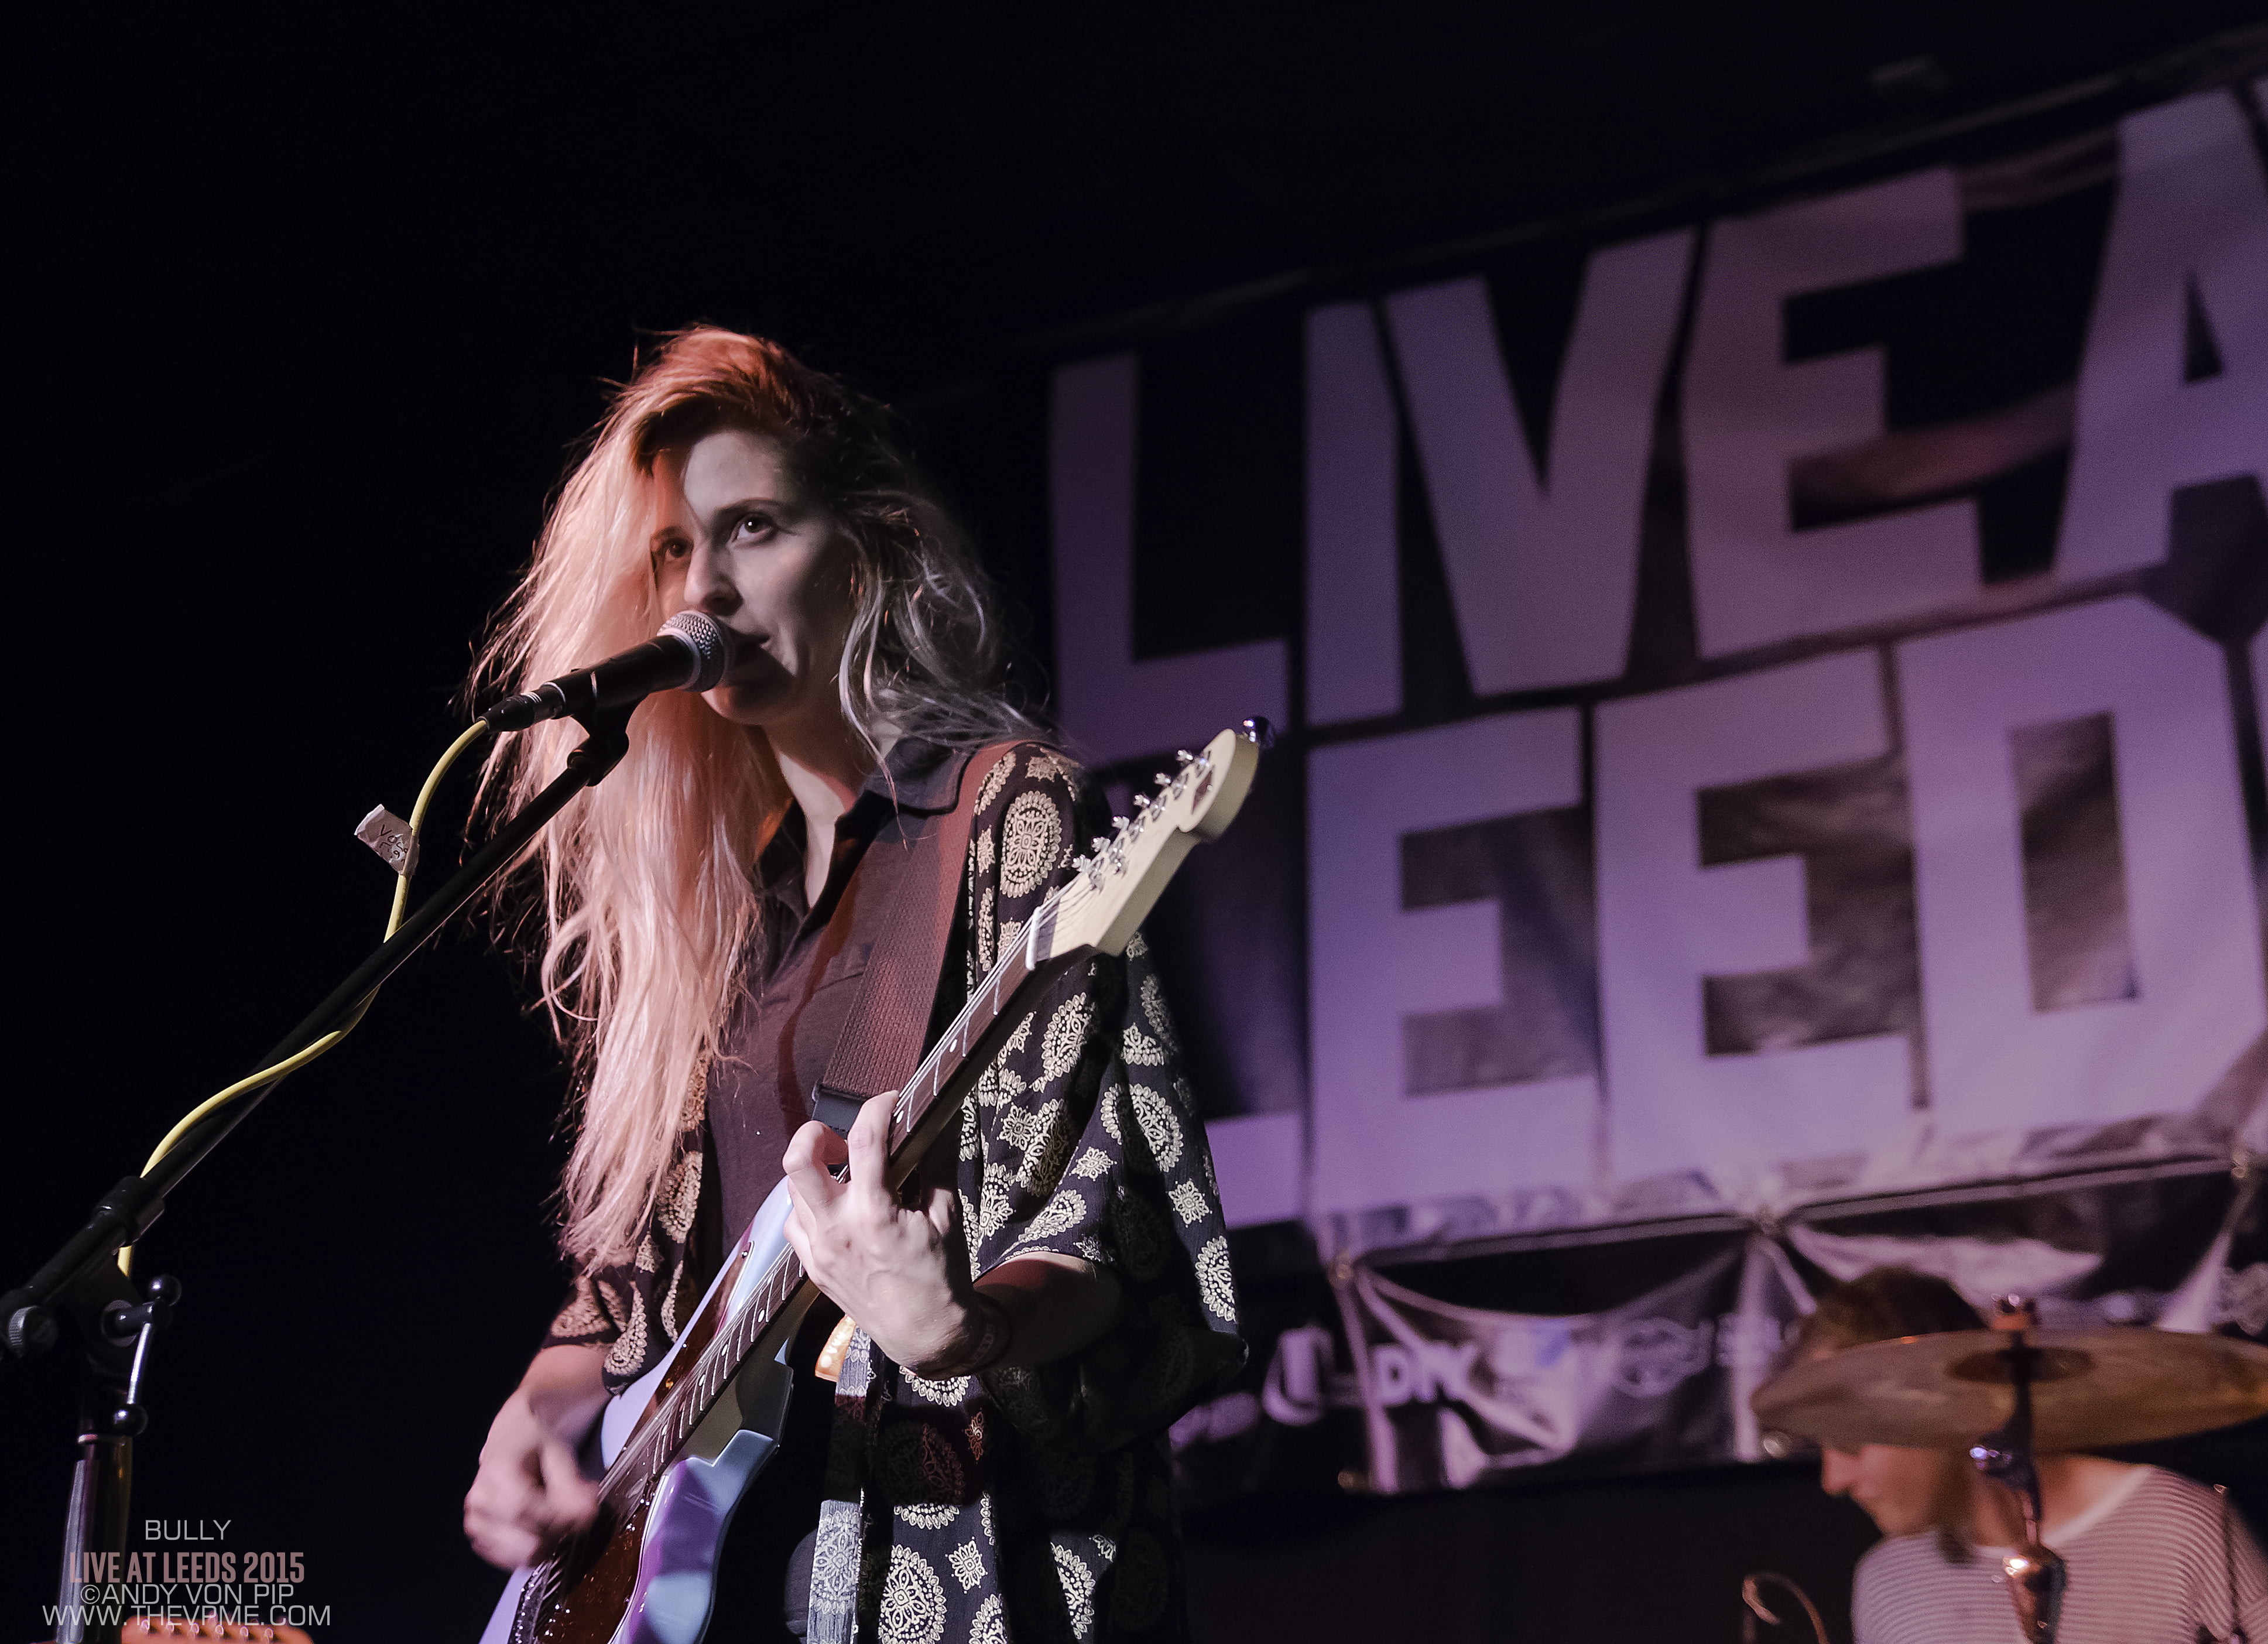 BULLY - Live At Leeds 2015